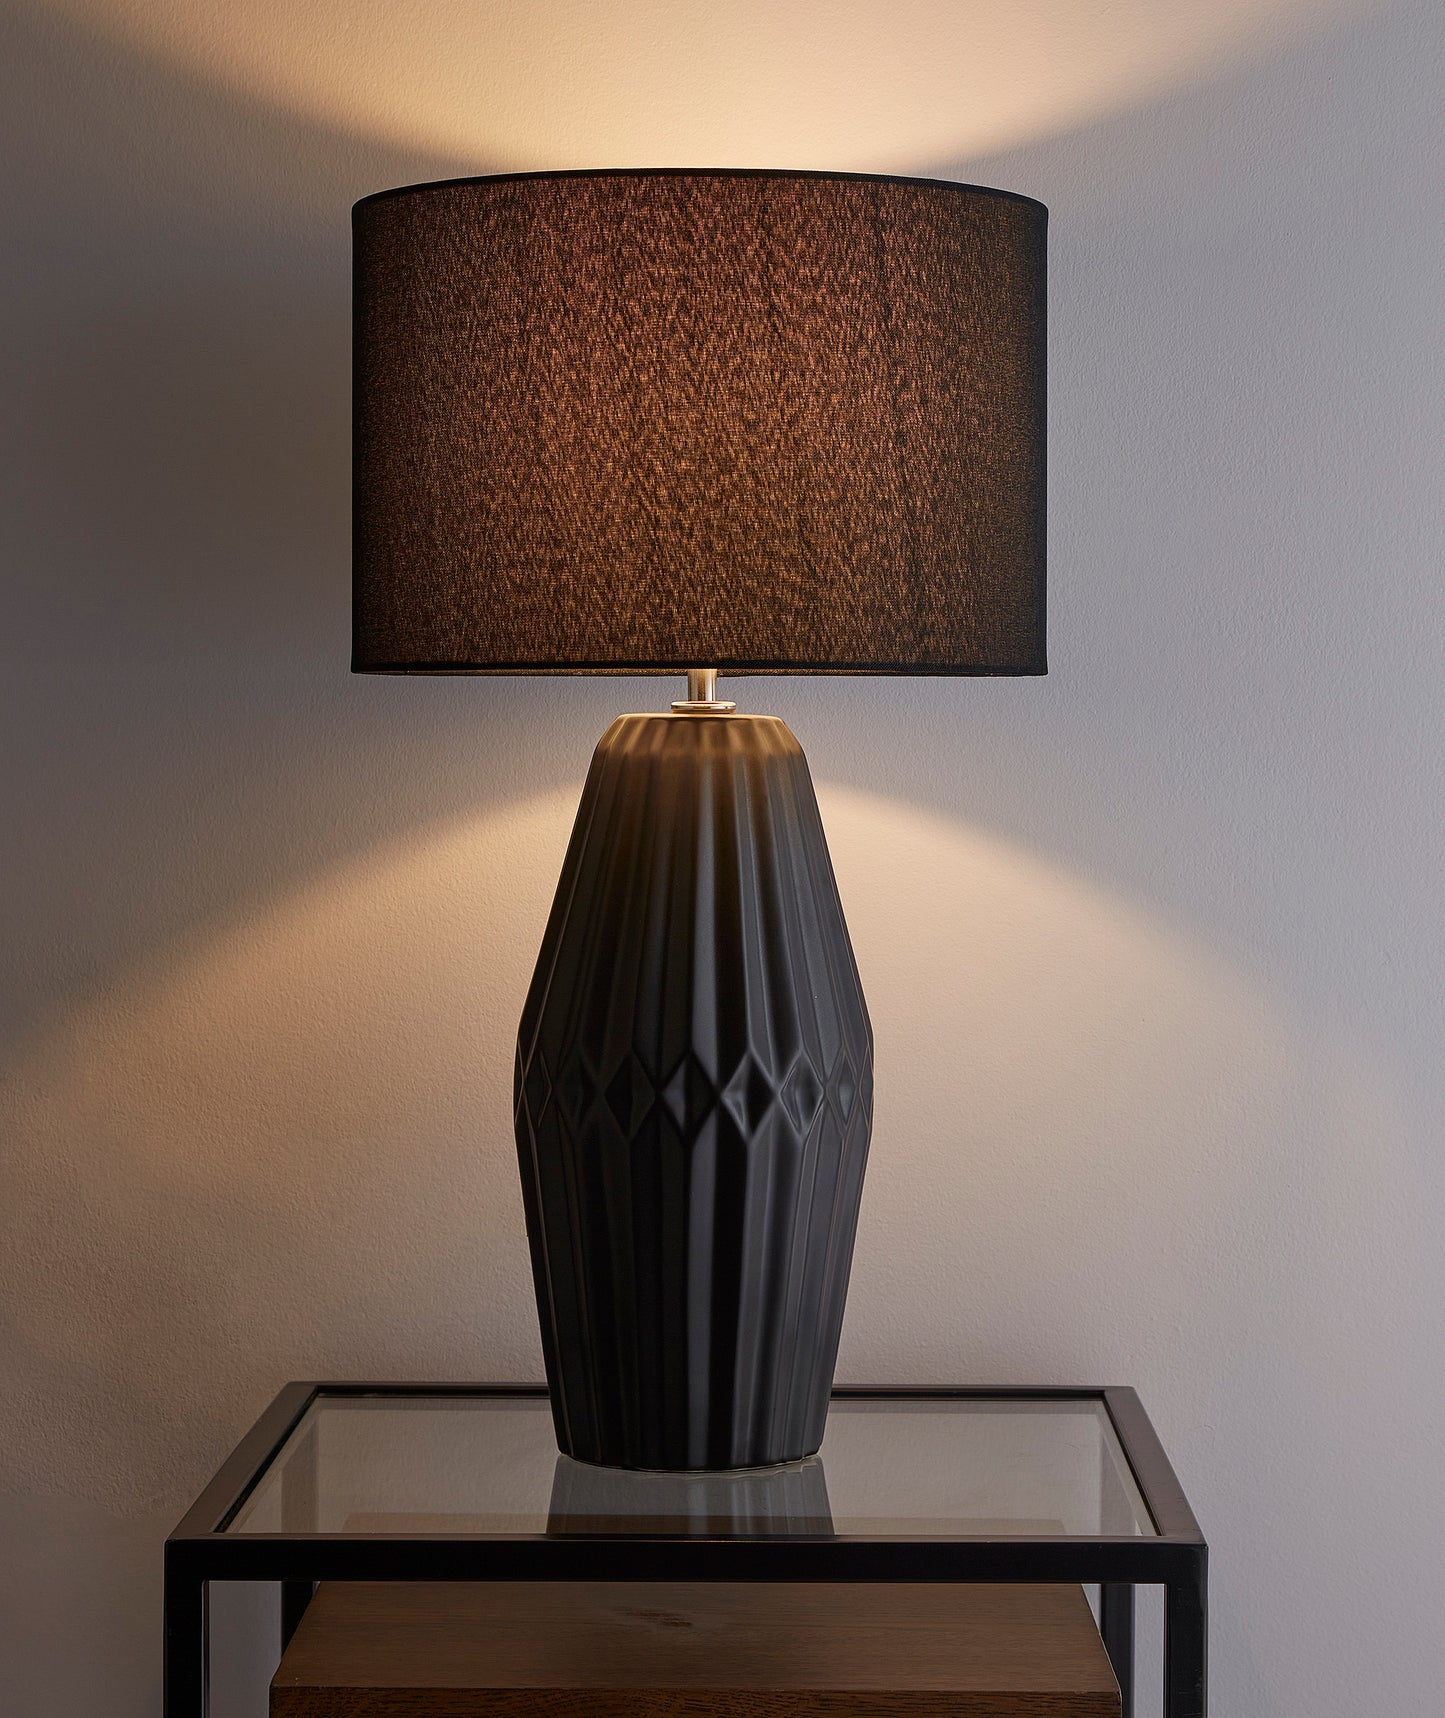 Nyon 54cm Black Ceramic Table Lamp With Matching Black shade for stunning decor finish